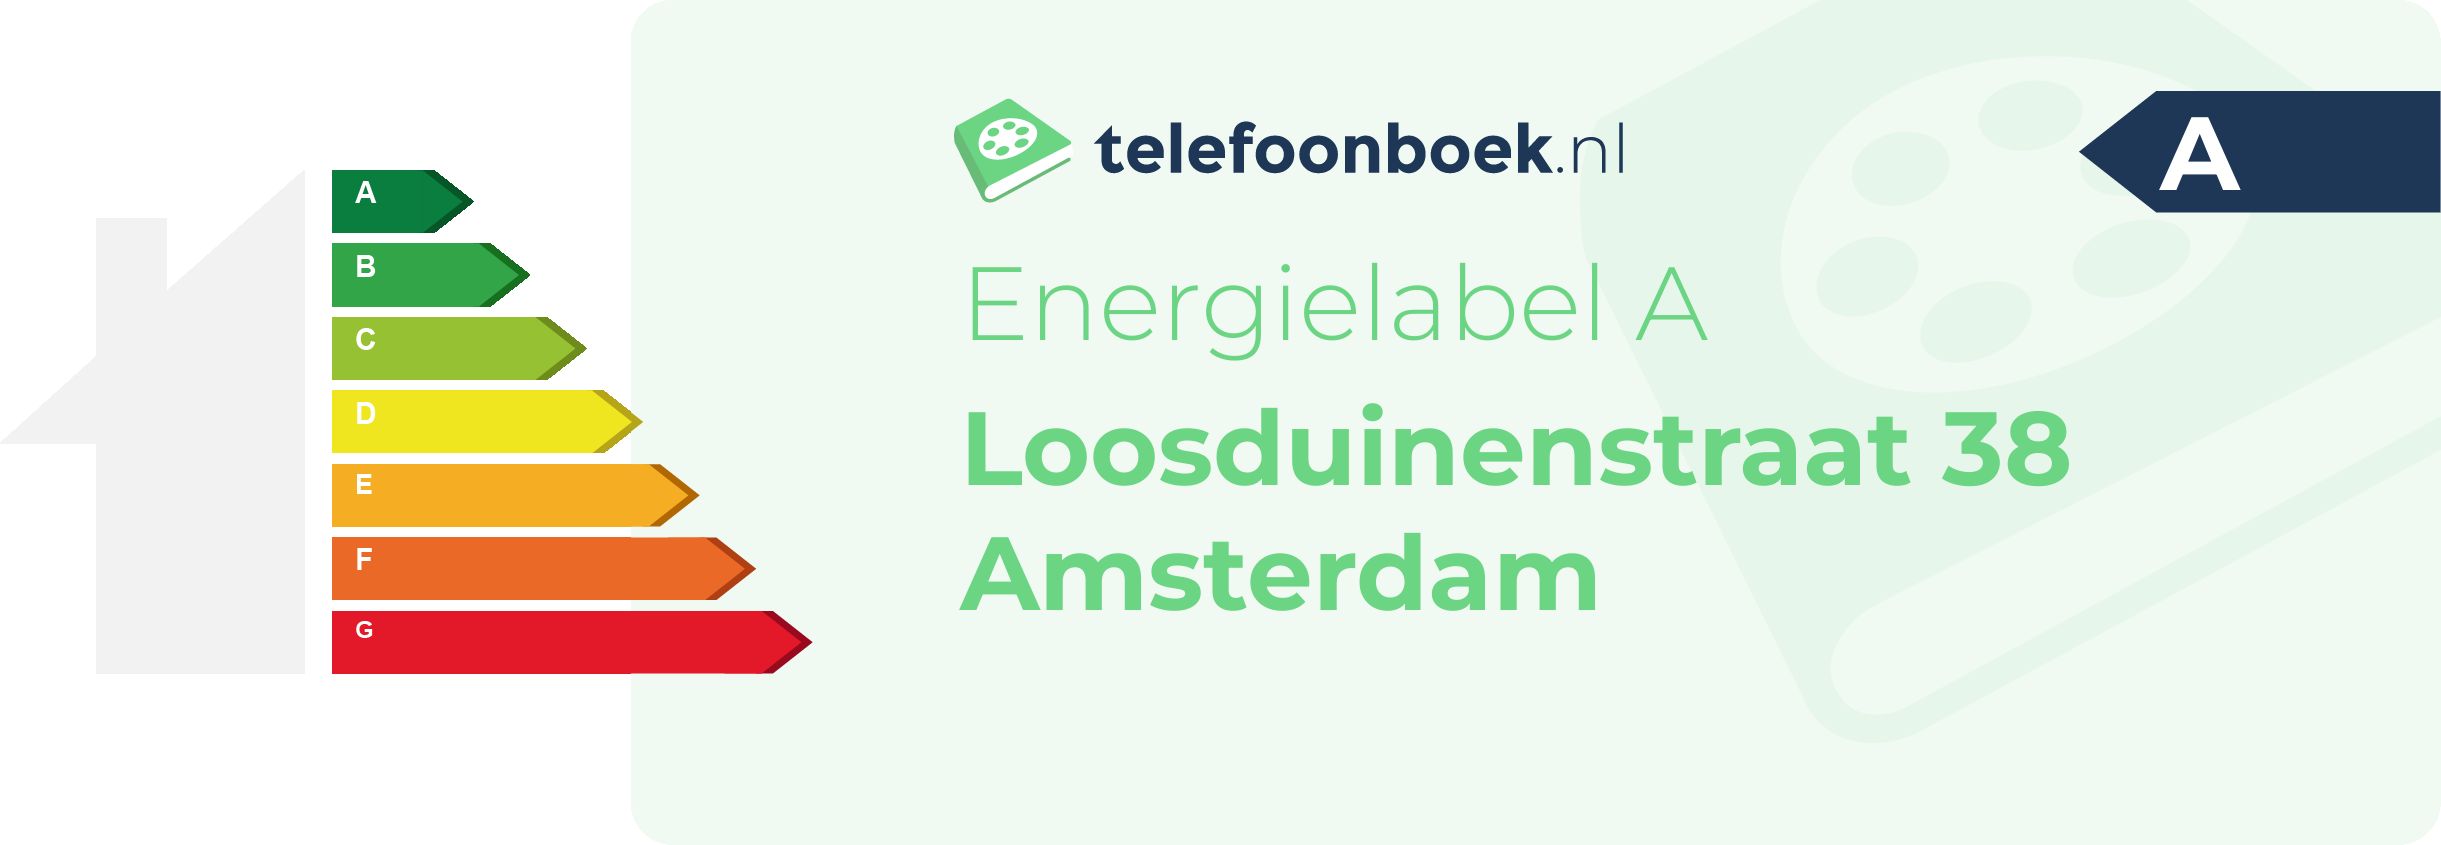 Energielabel Loosduinenstraat 38 Amsterdam